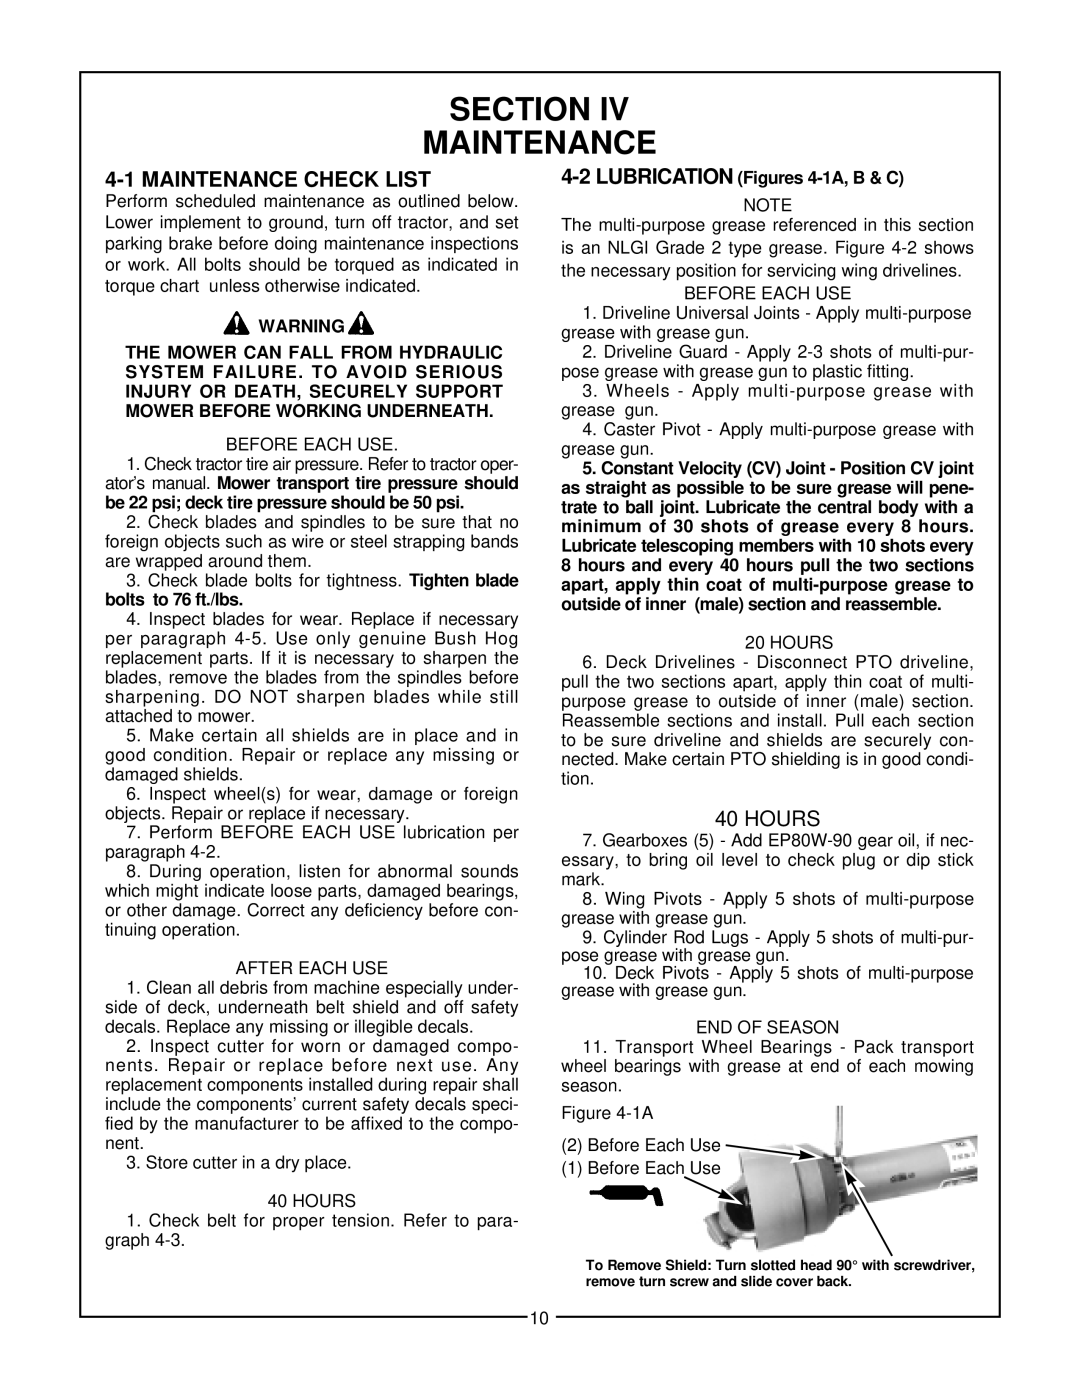 Bush Hog TD-1100 manual Section Maintenance, 4-1MAINTENANCE CHECK LIST, 4-2LUBRICATION Figures 4-1A,B & C 